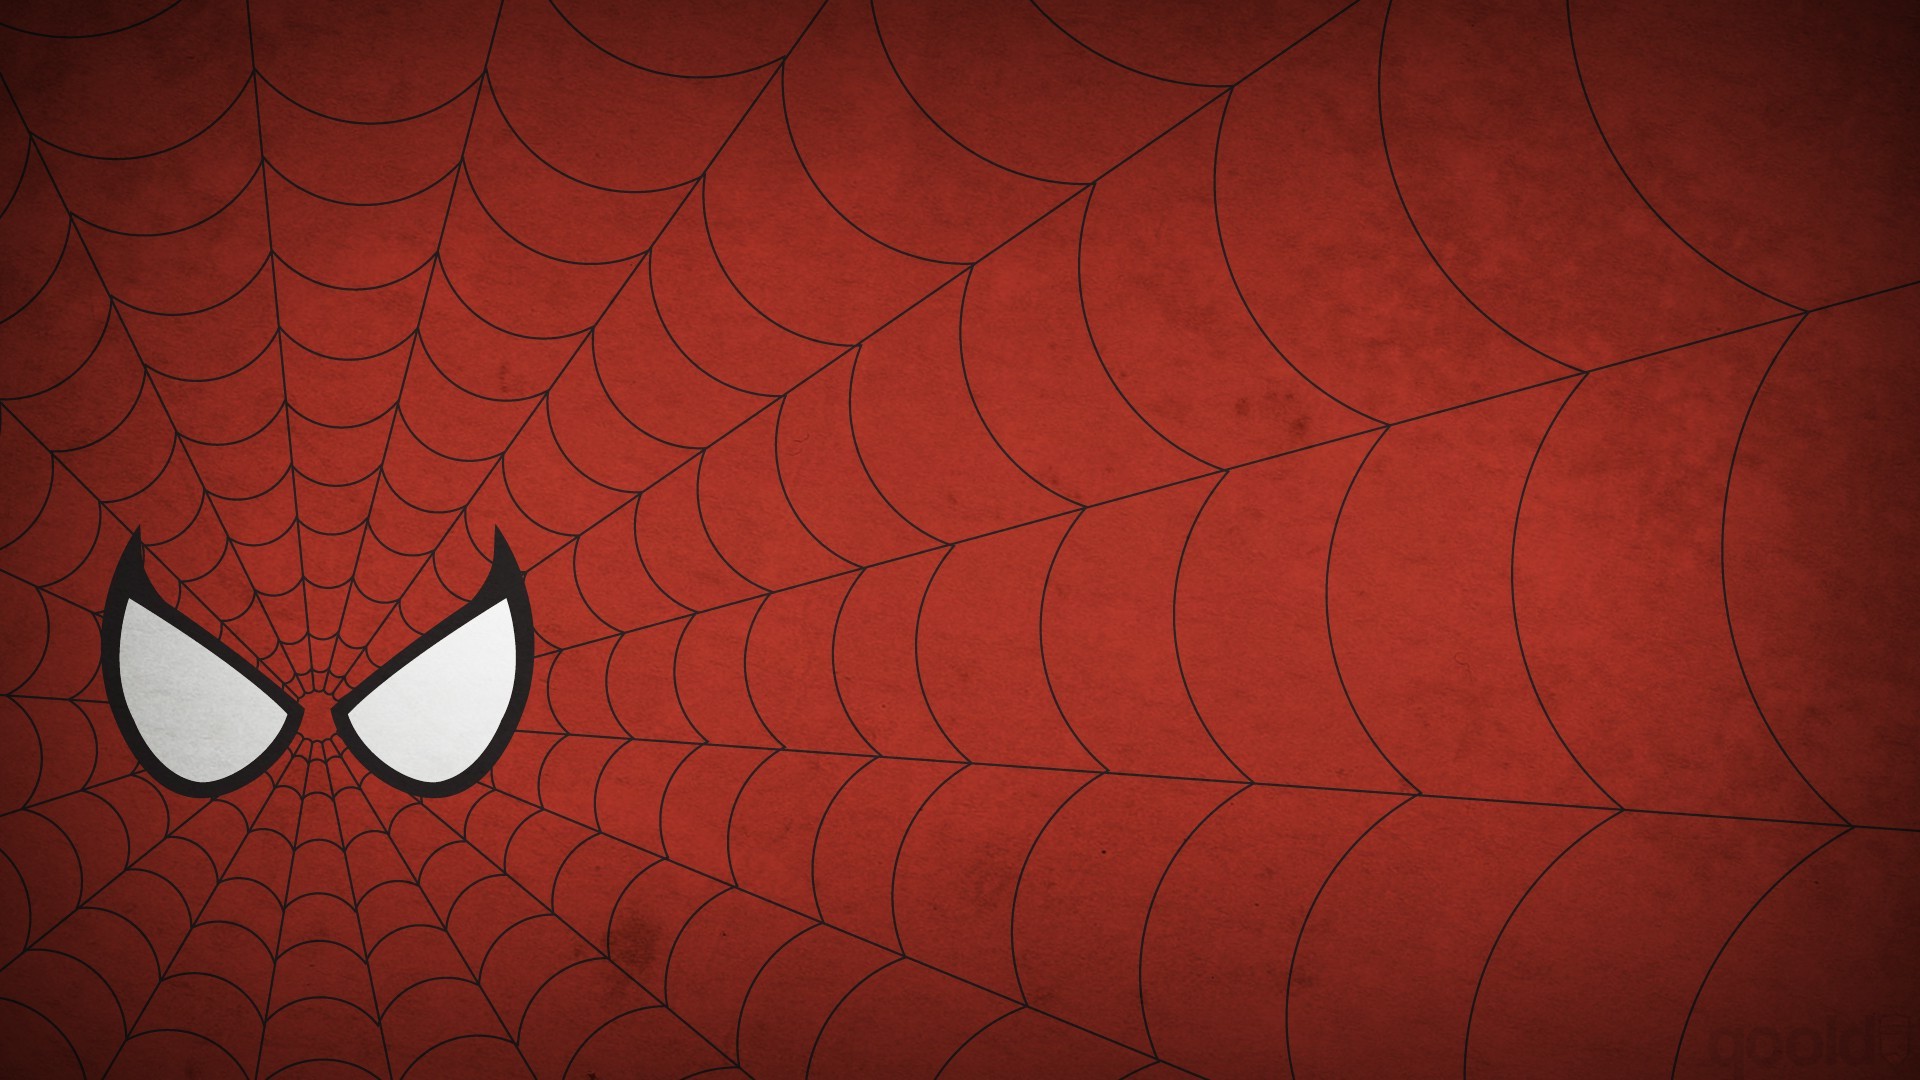 spider web wallpaper